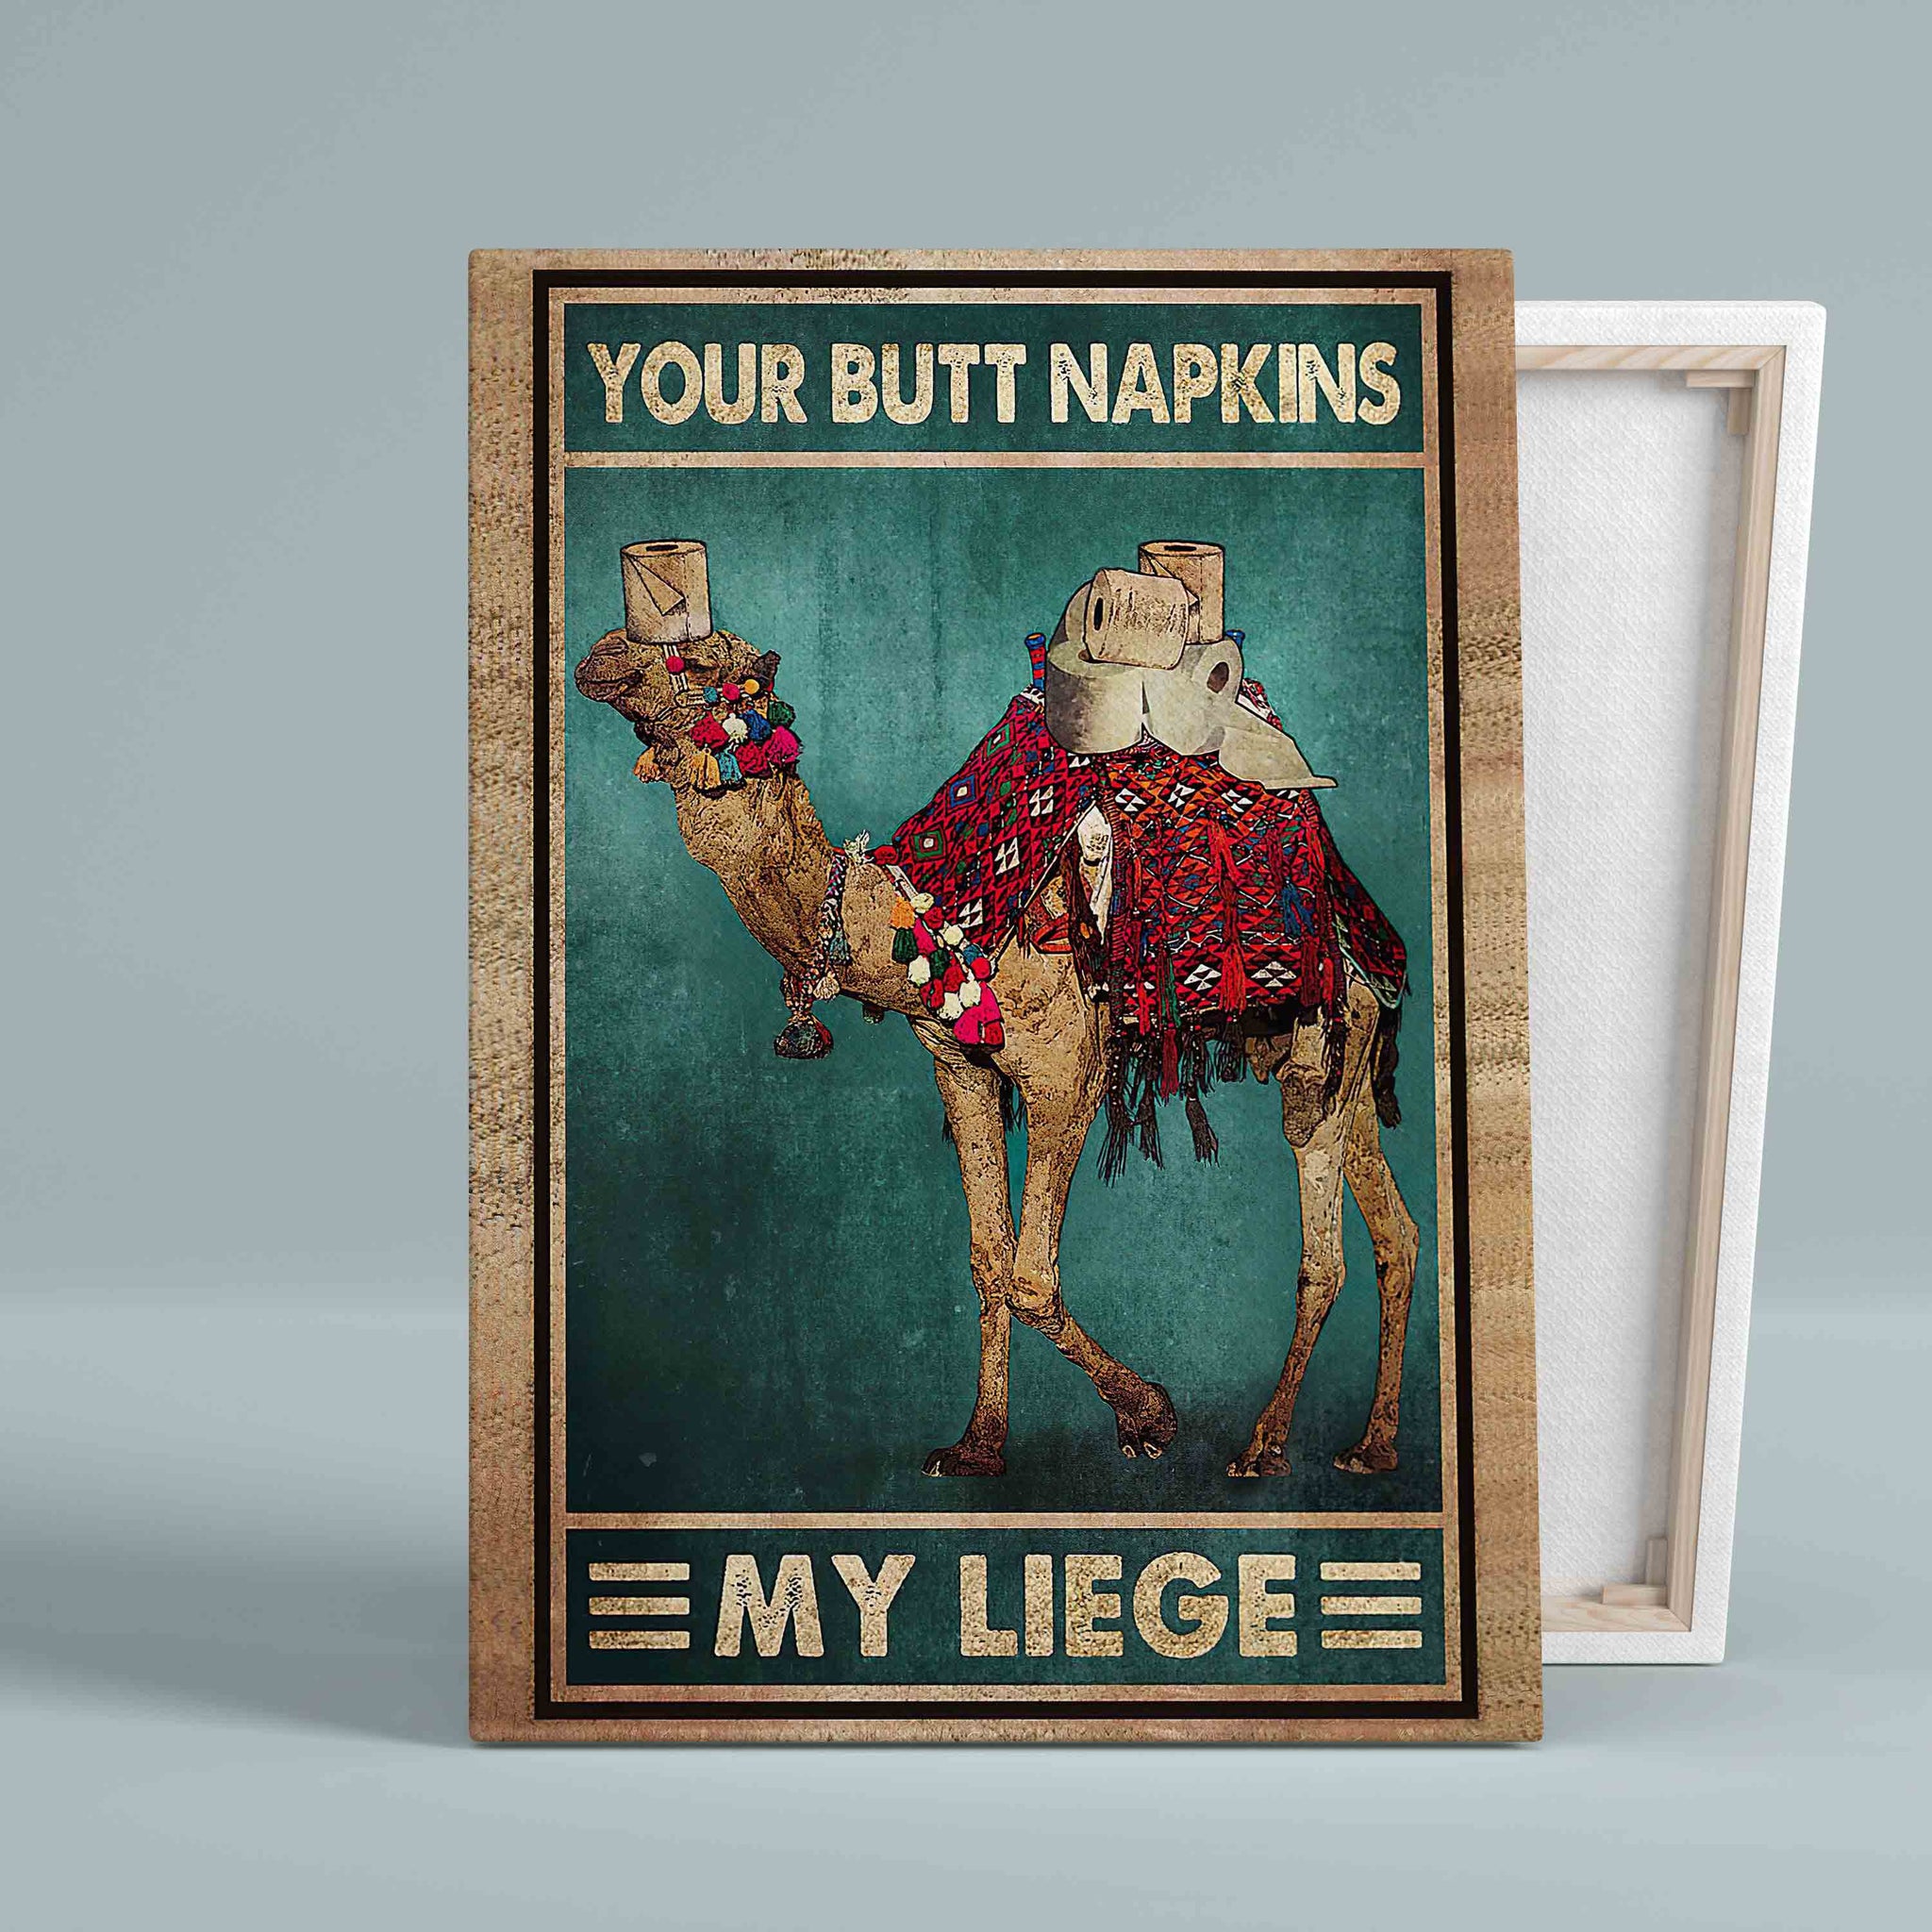 Your Butt Napkins My Liege Canvas, Camel Canvas, Restroom Canvas, Toilet Paper Canvas, Funny Canvas